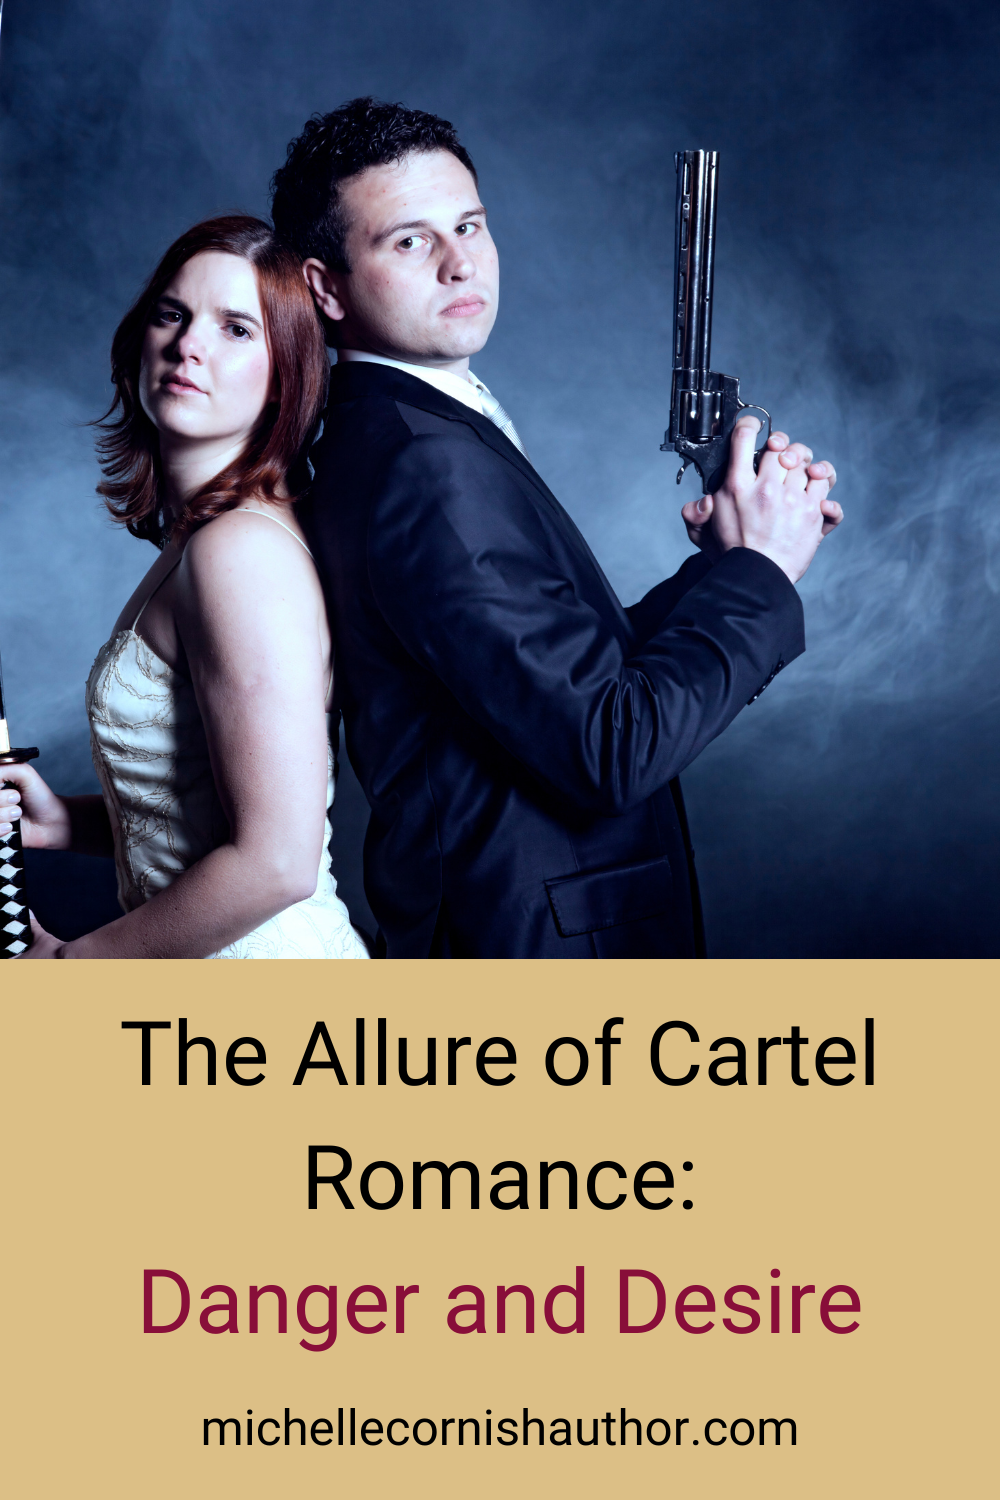 The Allure of Cartel Romance